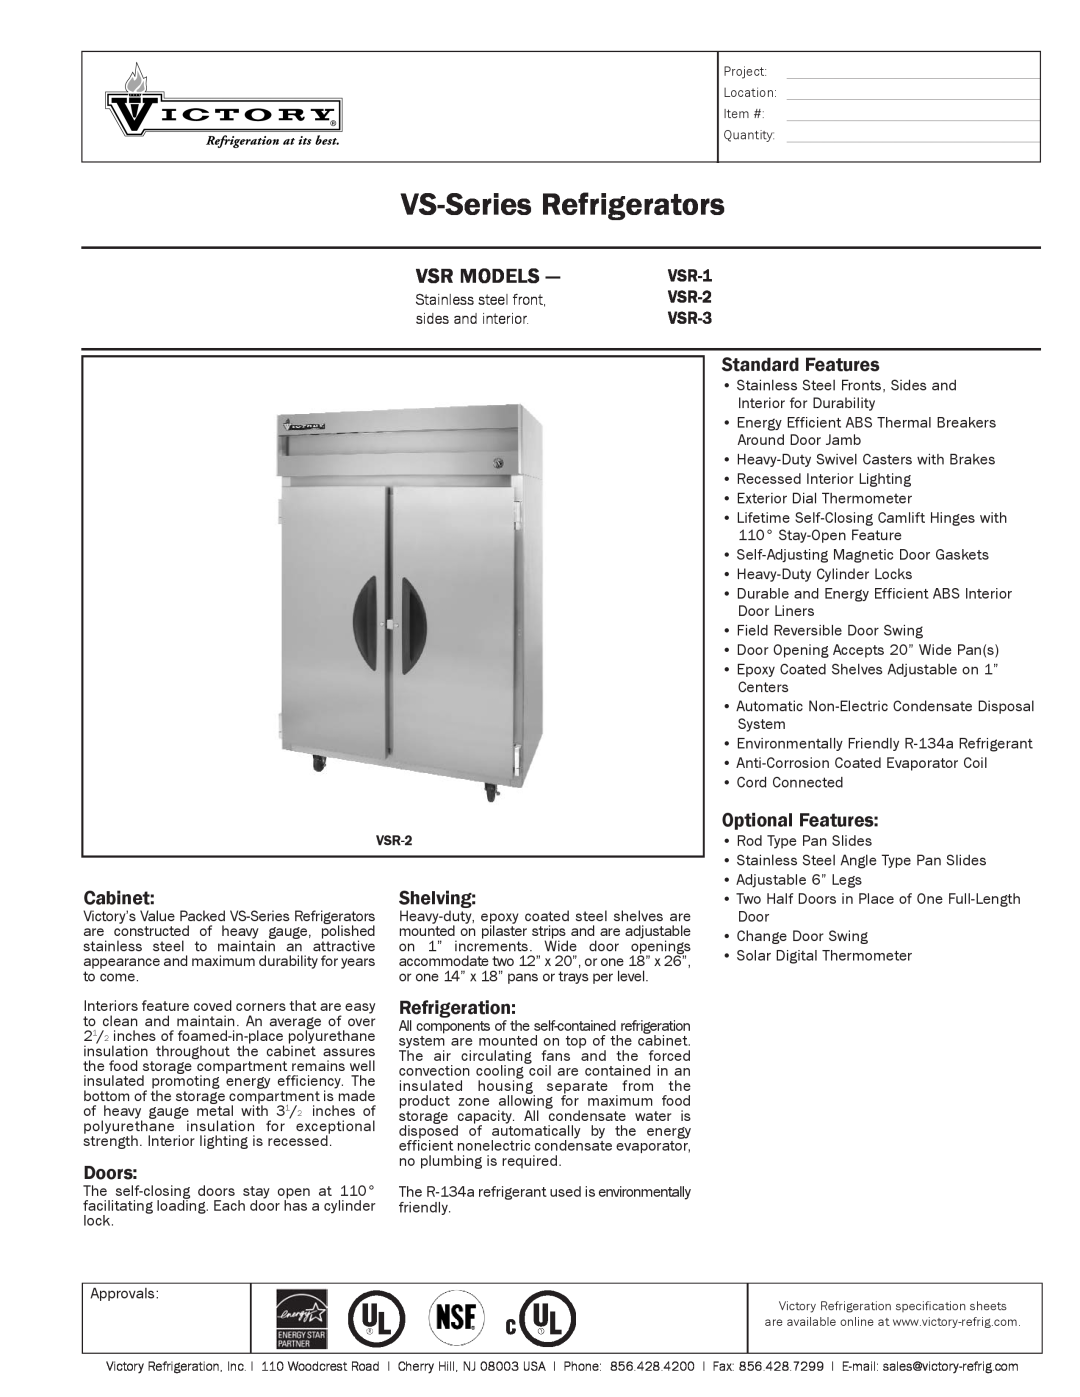 Victory Refrigeration VSR-2 specifications VS-SeriesRefrigerators, Vsr Models, Standard Features, Optional Features, Doors 